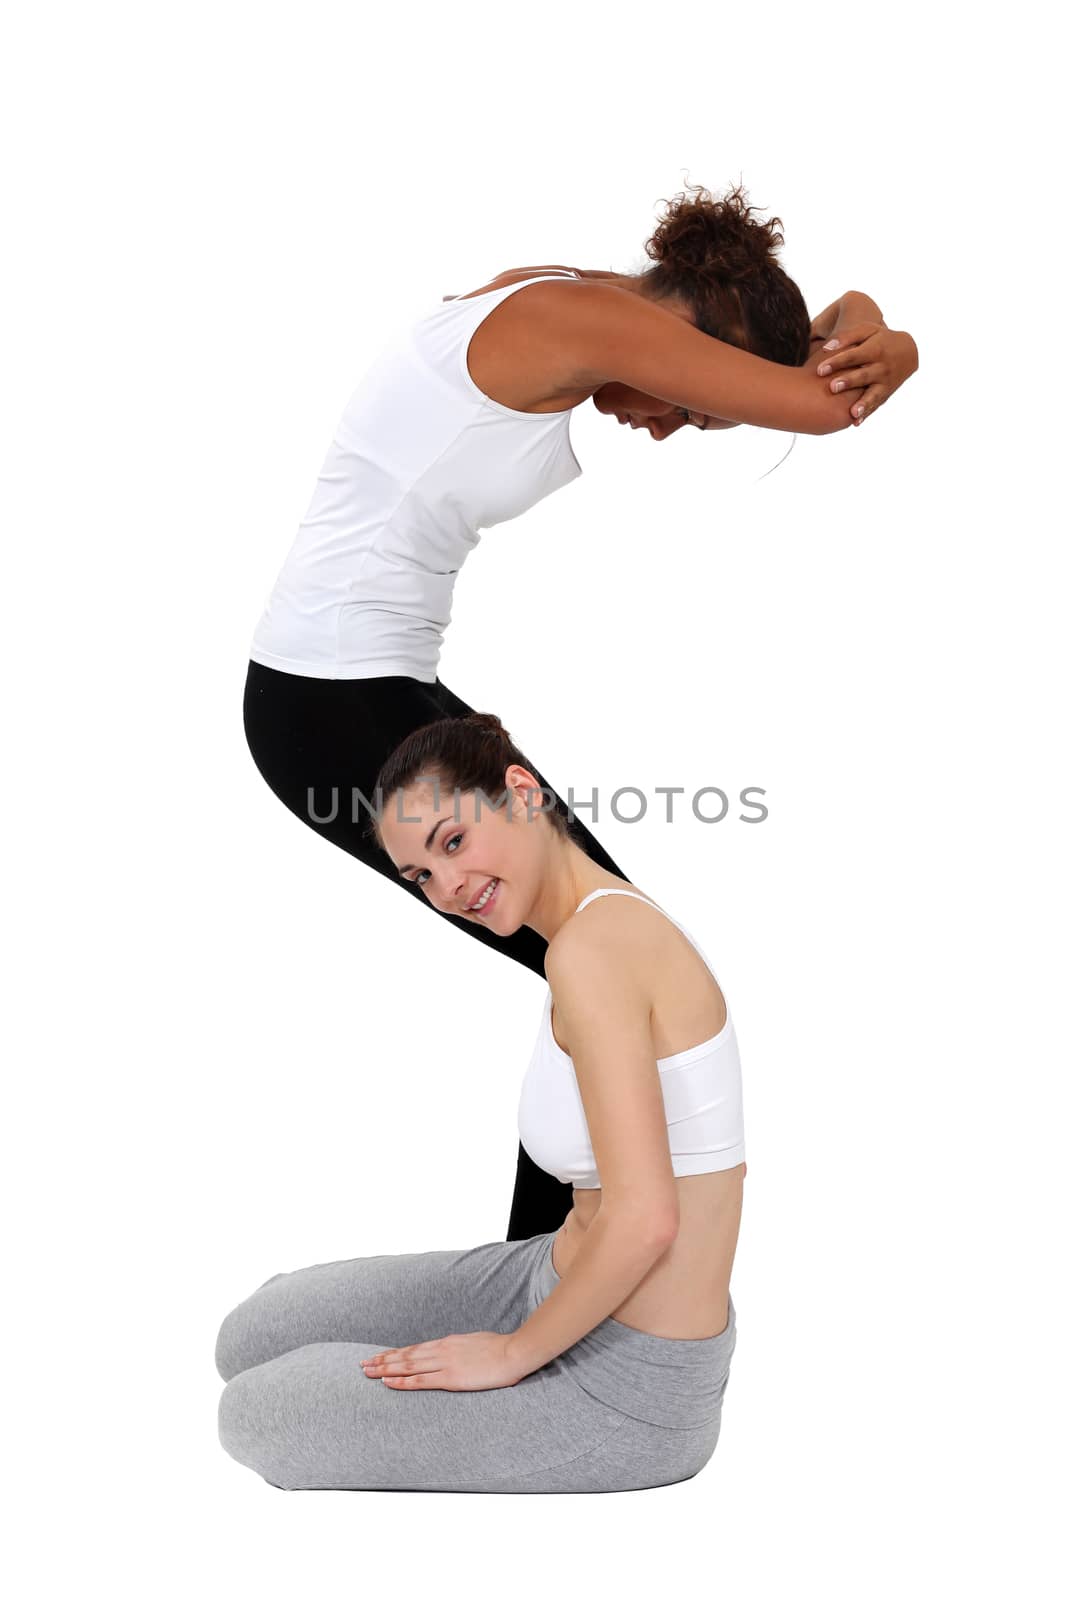 Two female gymnasts